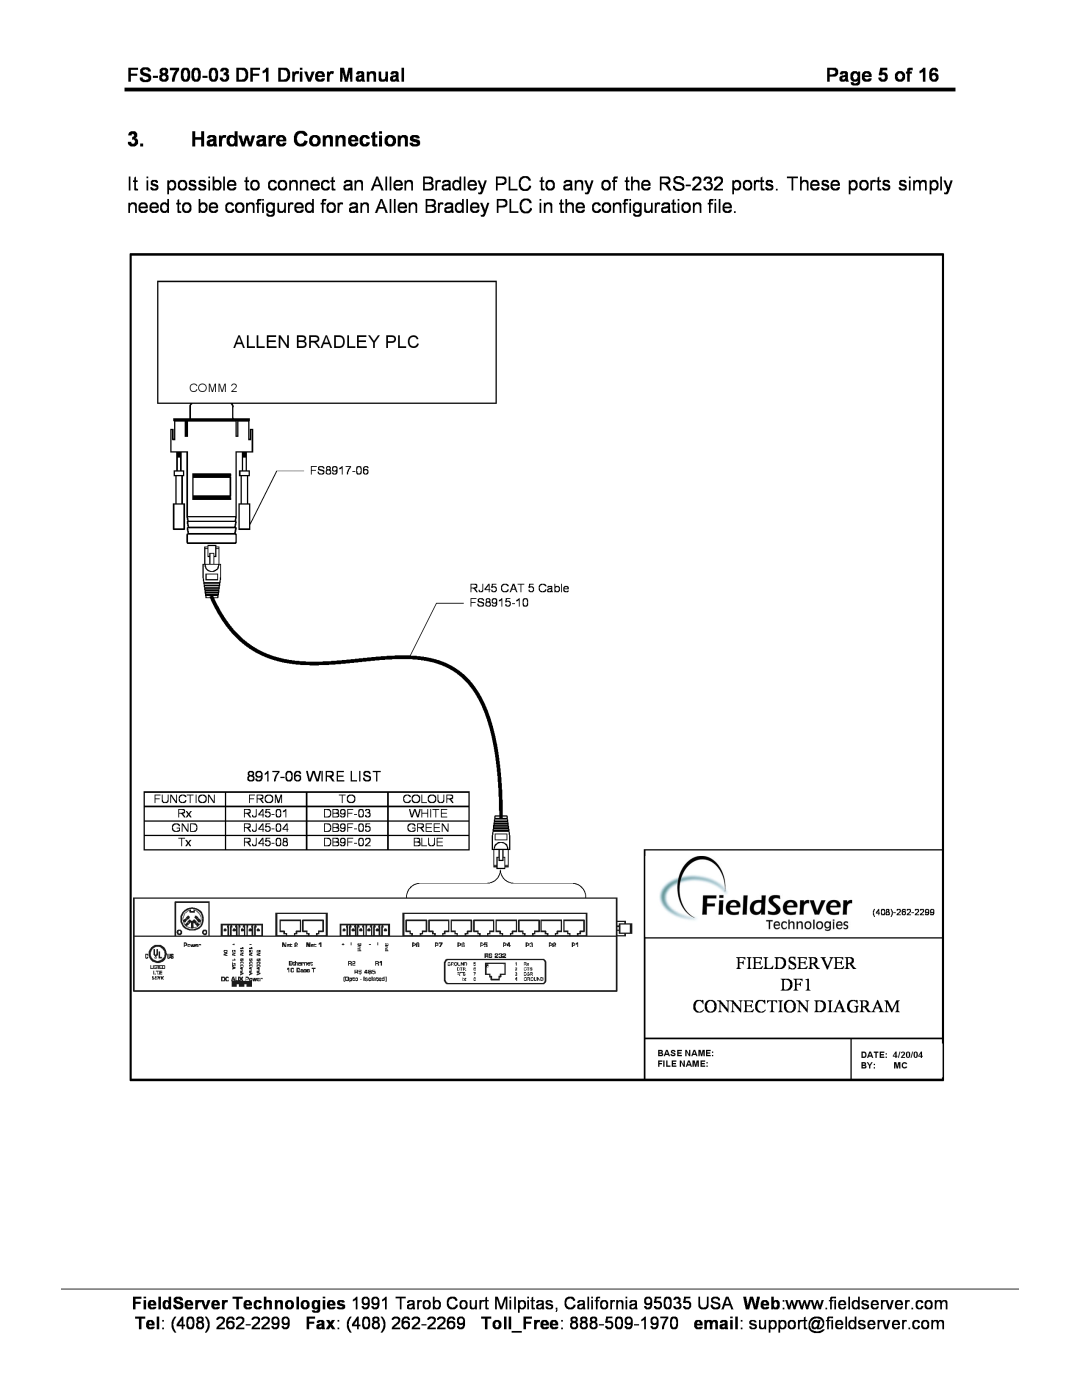 FieldServer FS-8700-03 DF1 instruction manual Hardware Connections, Allen Bradley Plc 